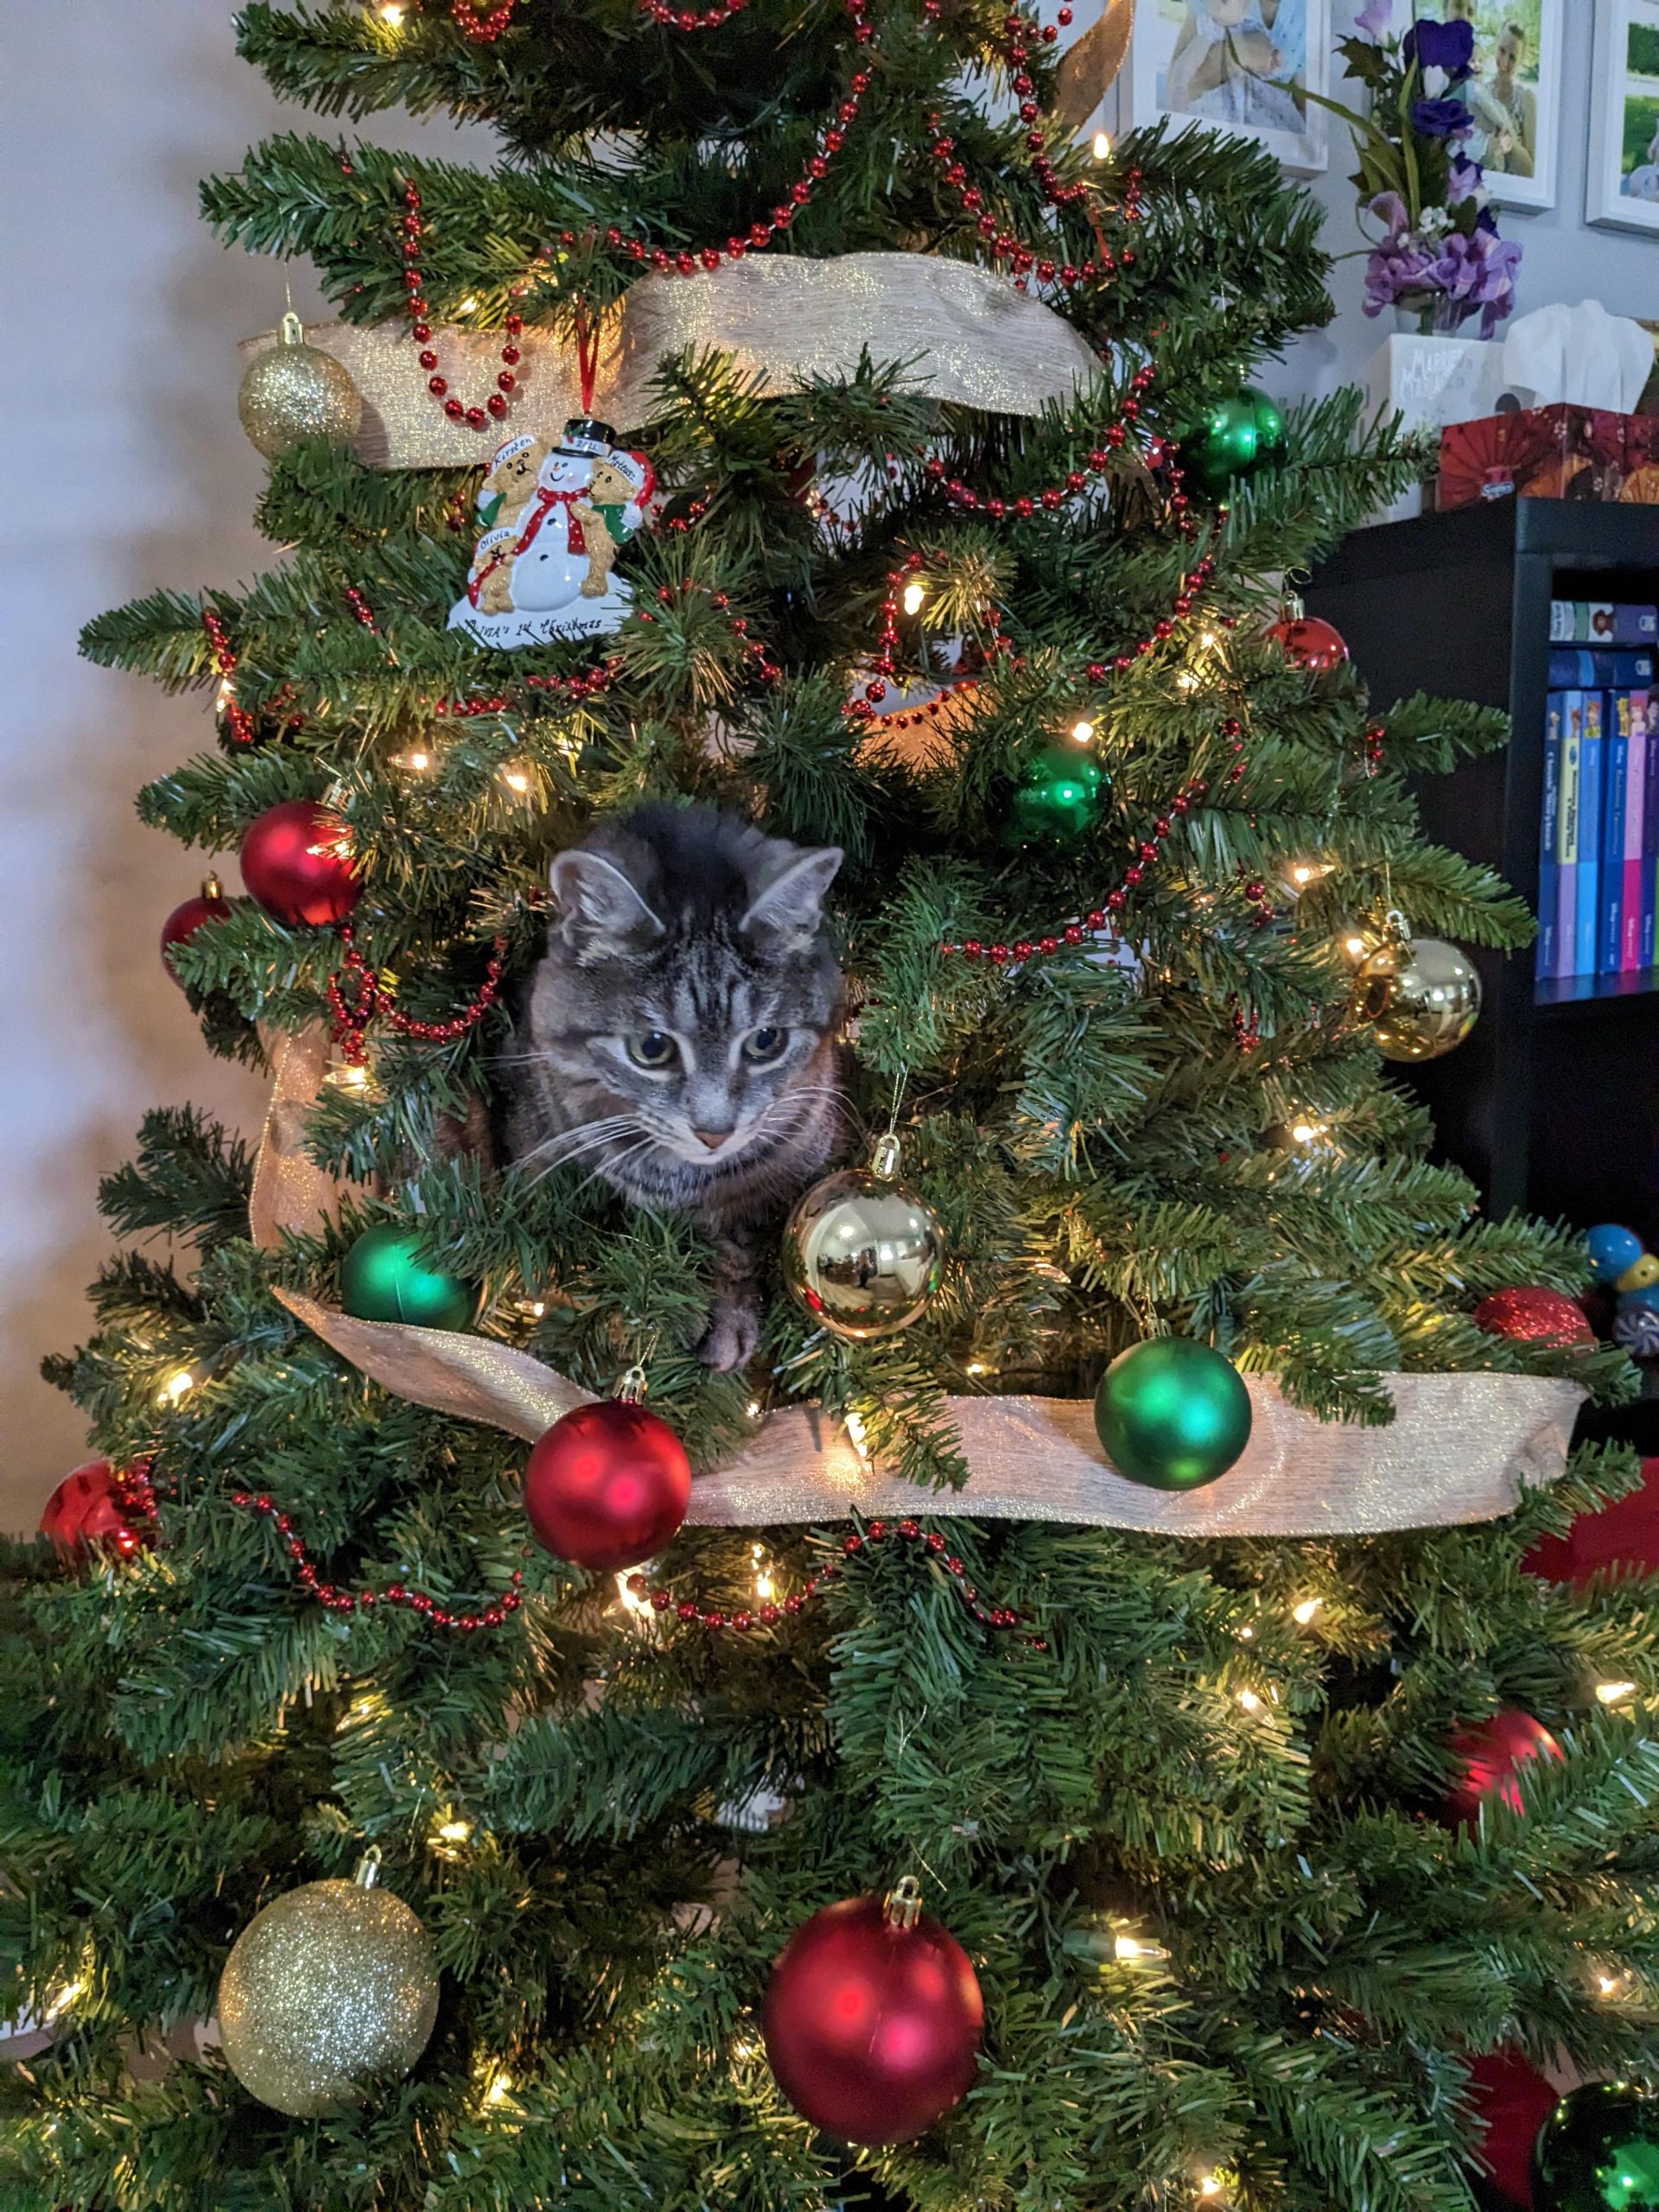 Kitty Christmas tree